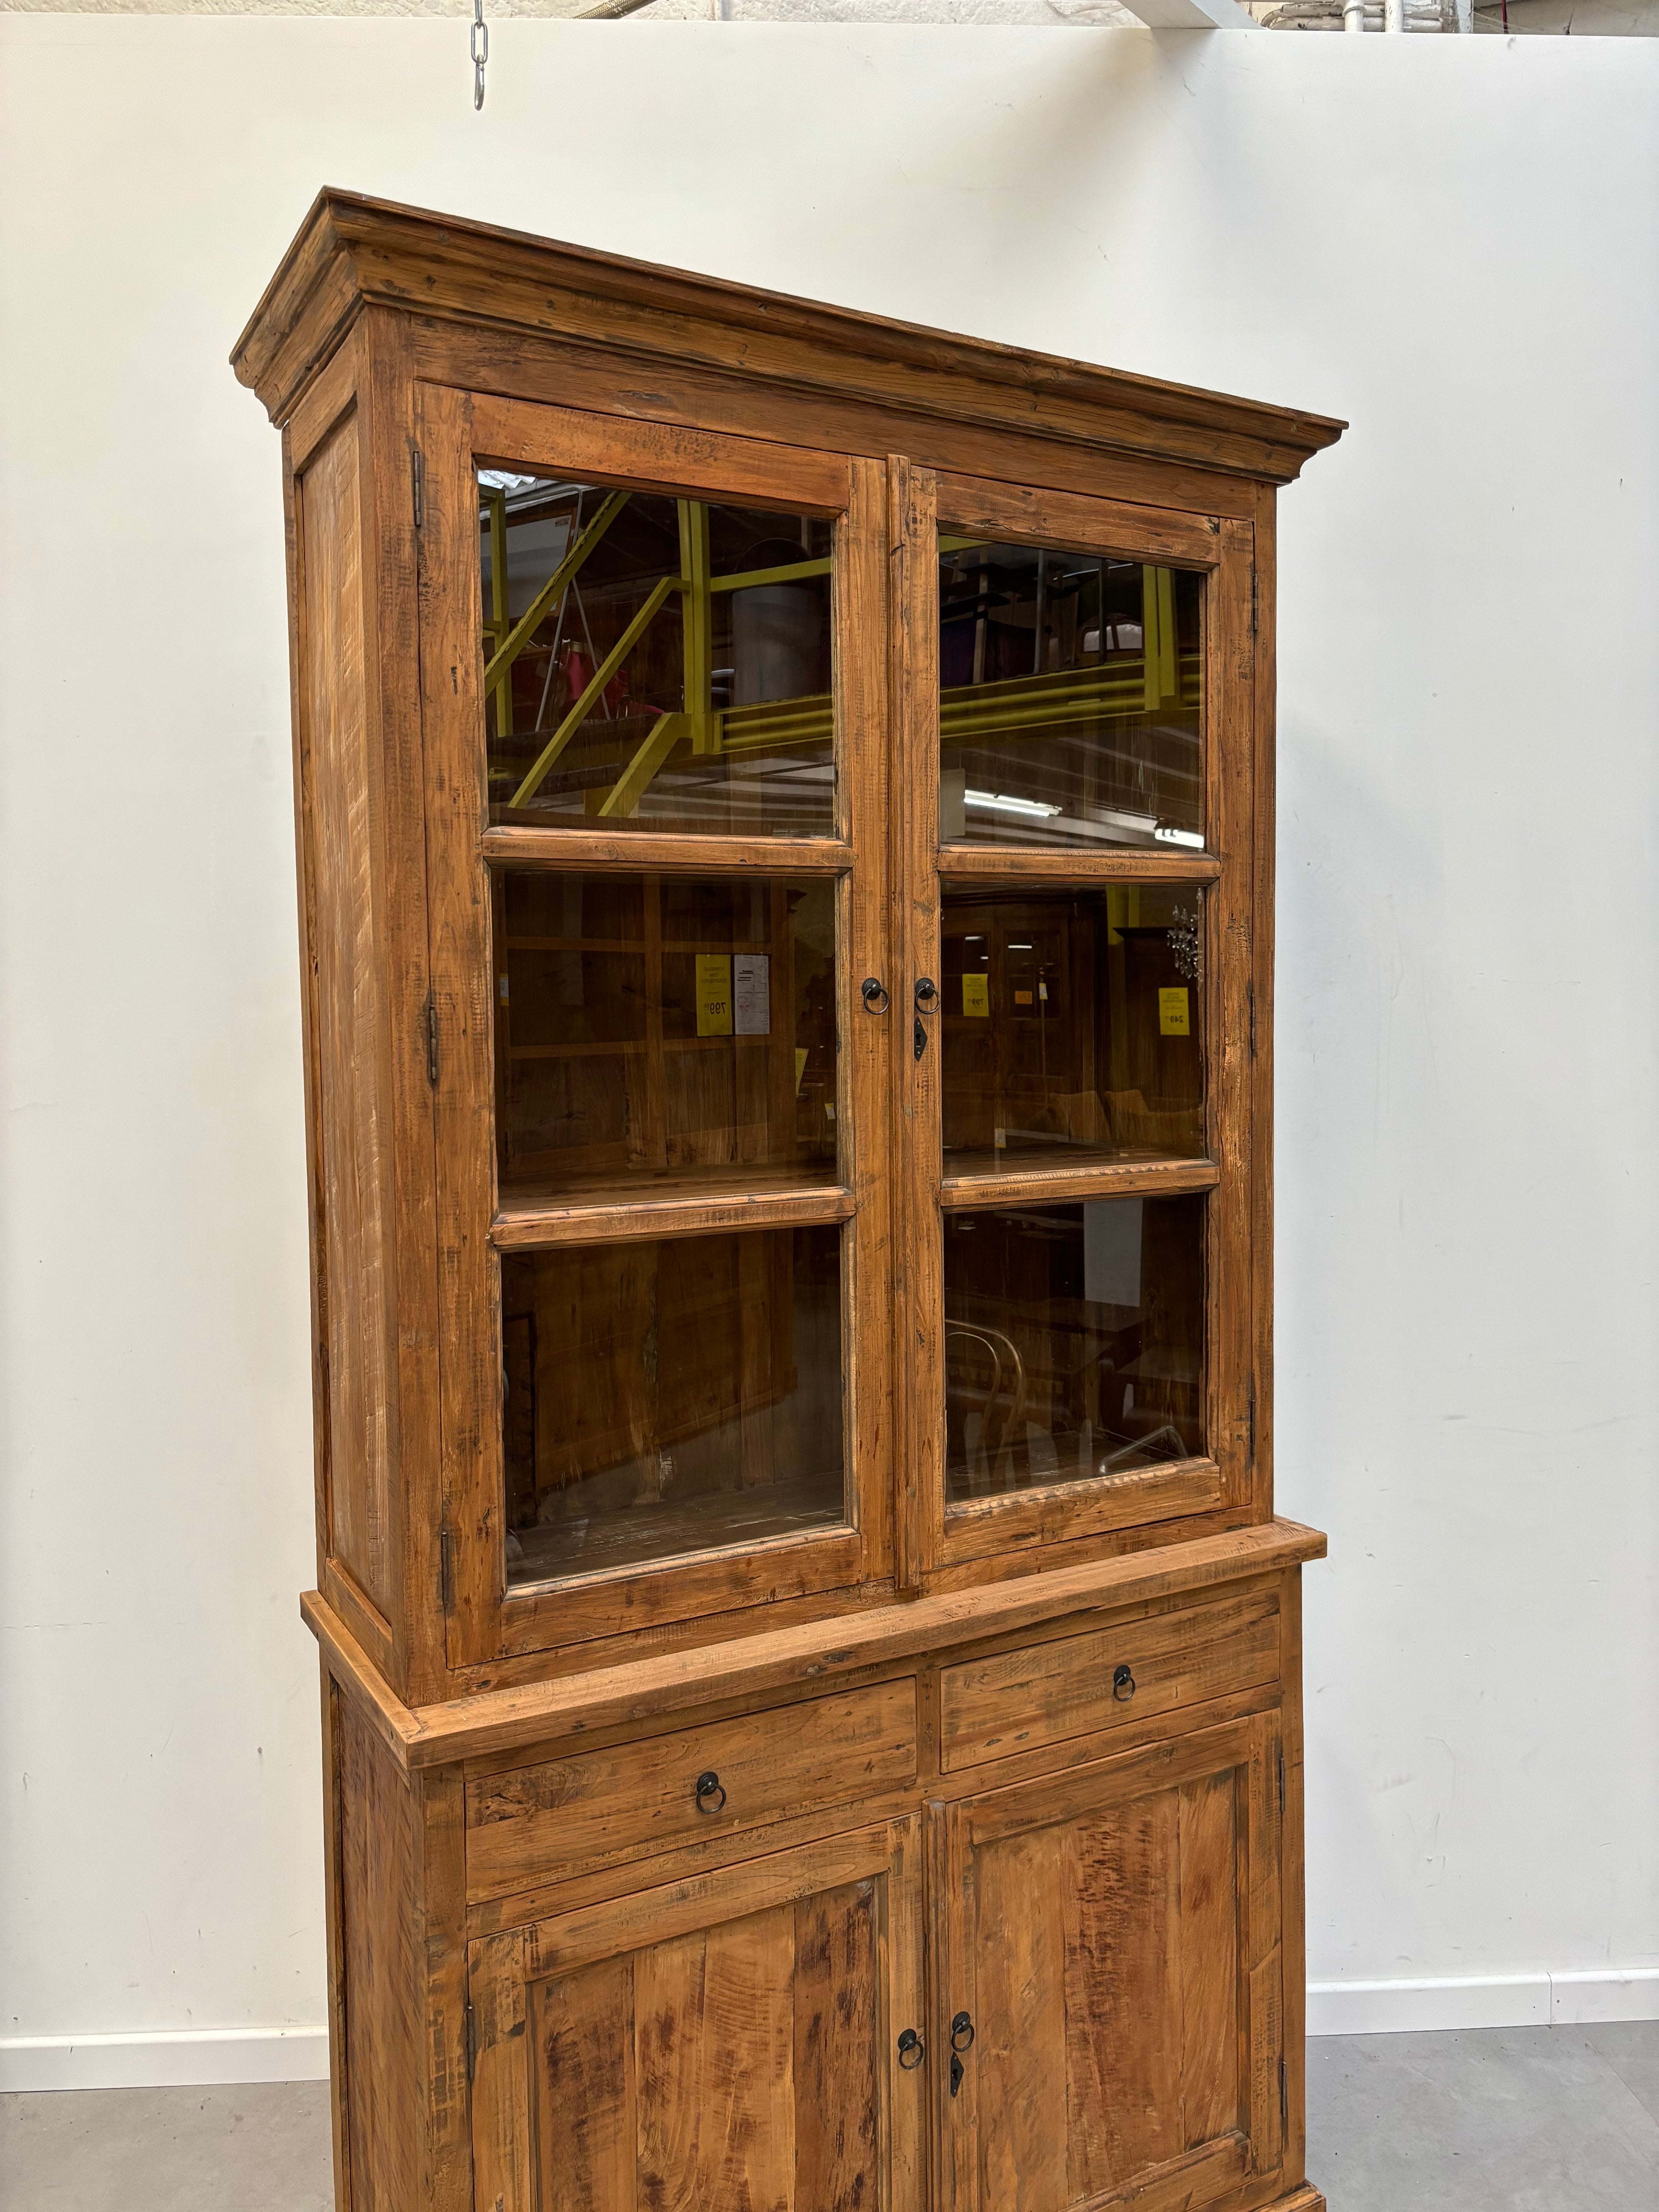 Display cabinet in recycled teakwood